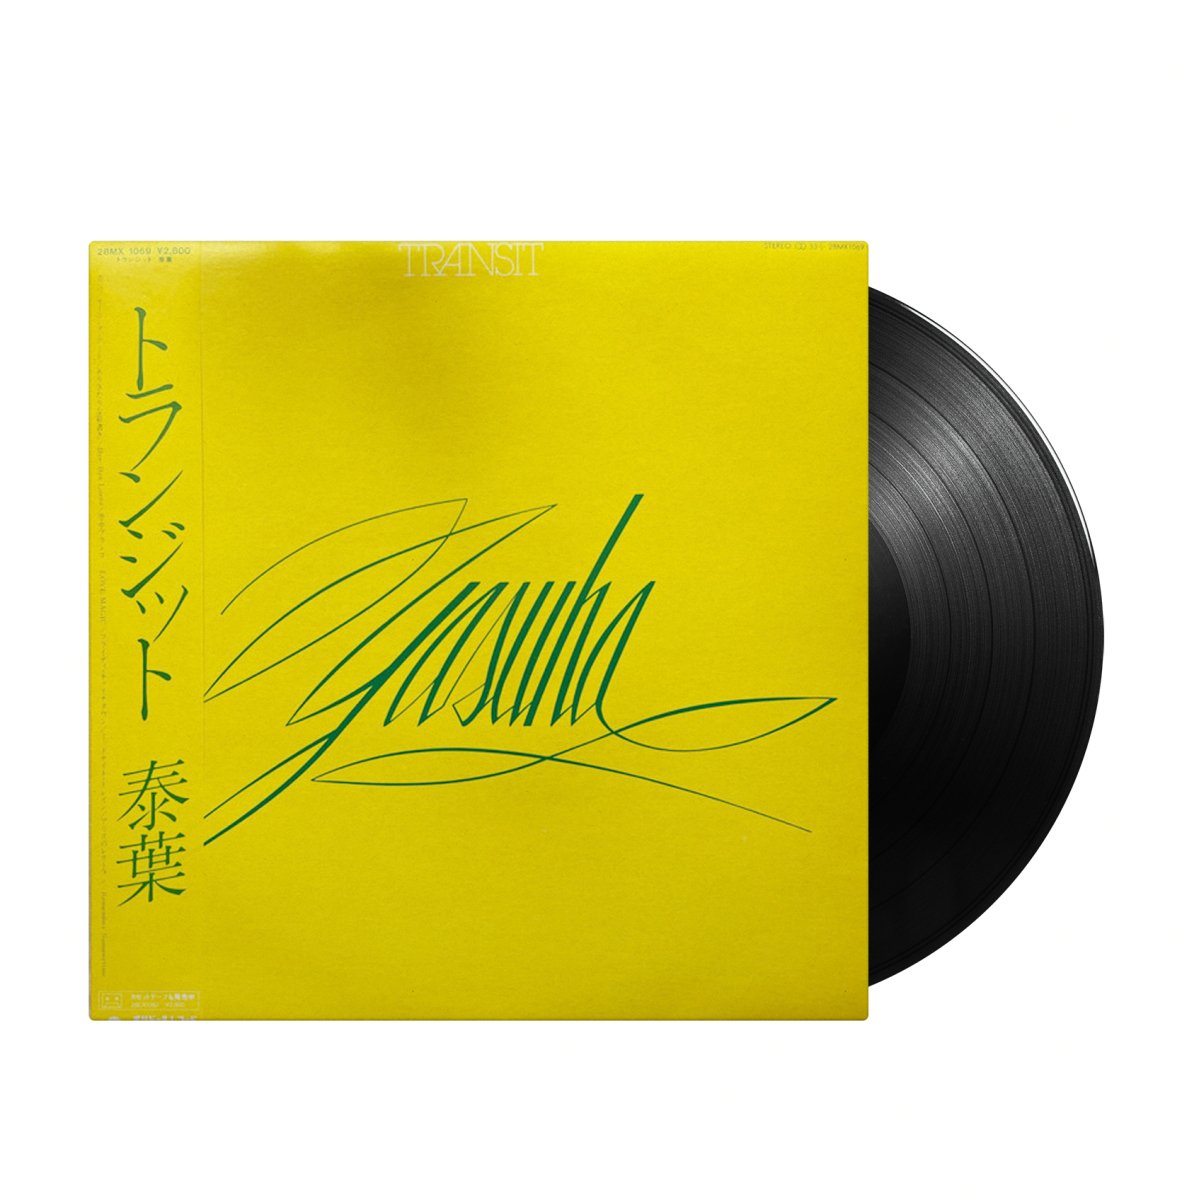 Yashua - Transit (Japan Import) - Inner Ocean Records